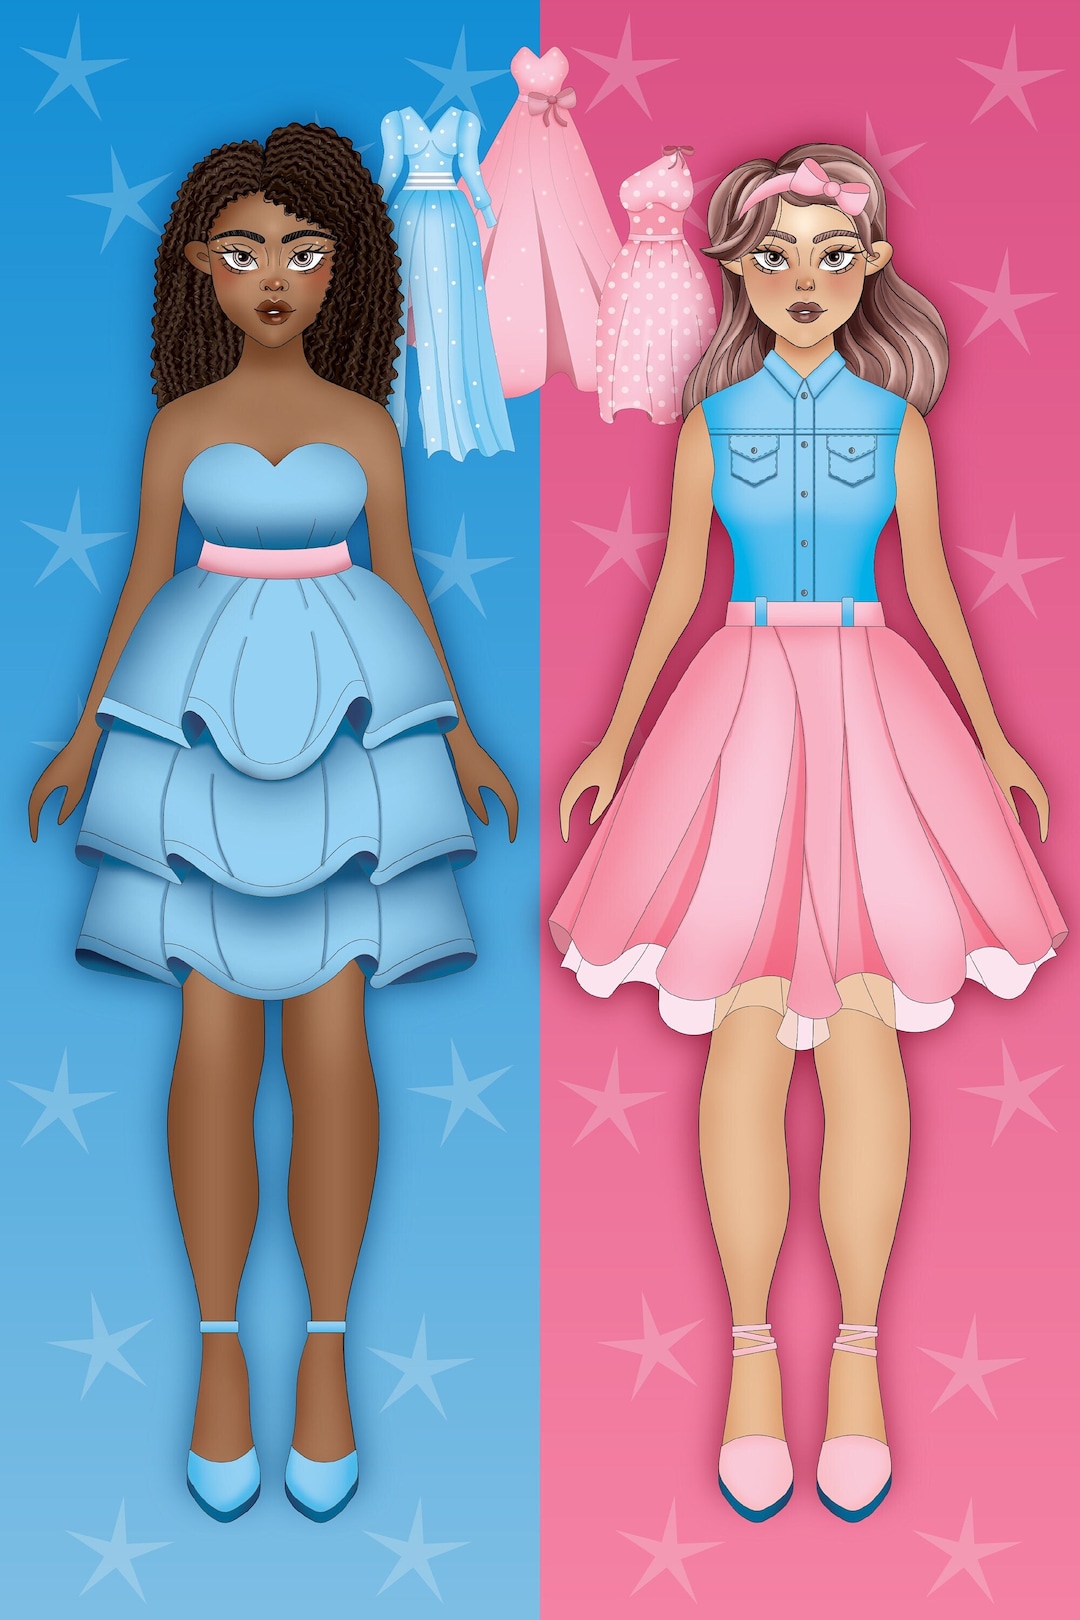 Pin by Dana Games on Pato de papel  Paper doll dress, Princess paper dolls,  Princess paper dolls printable